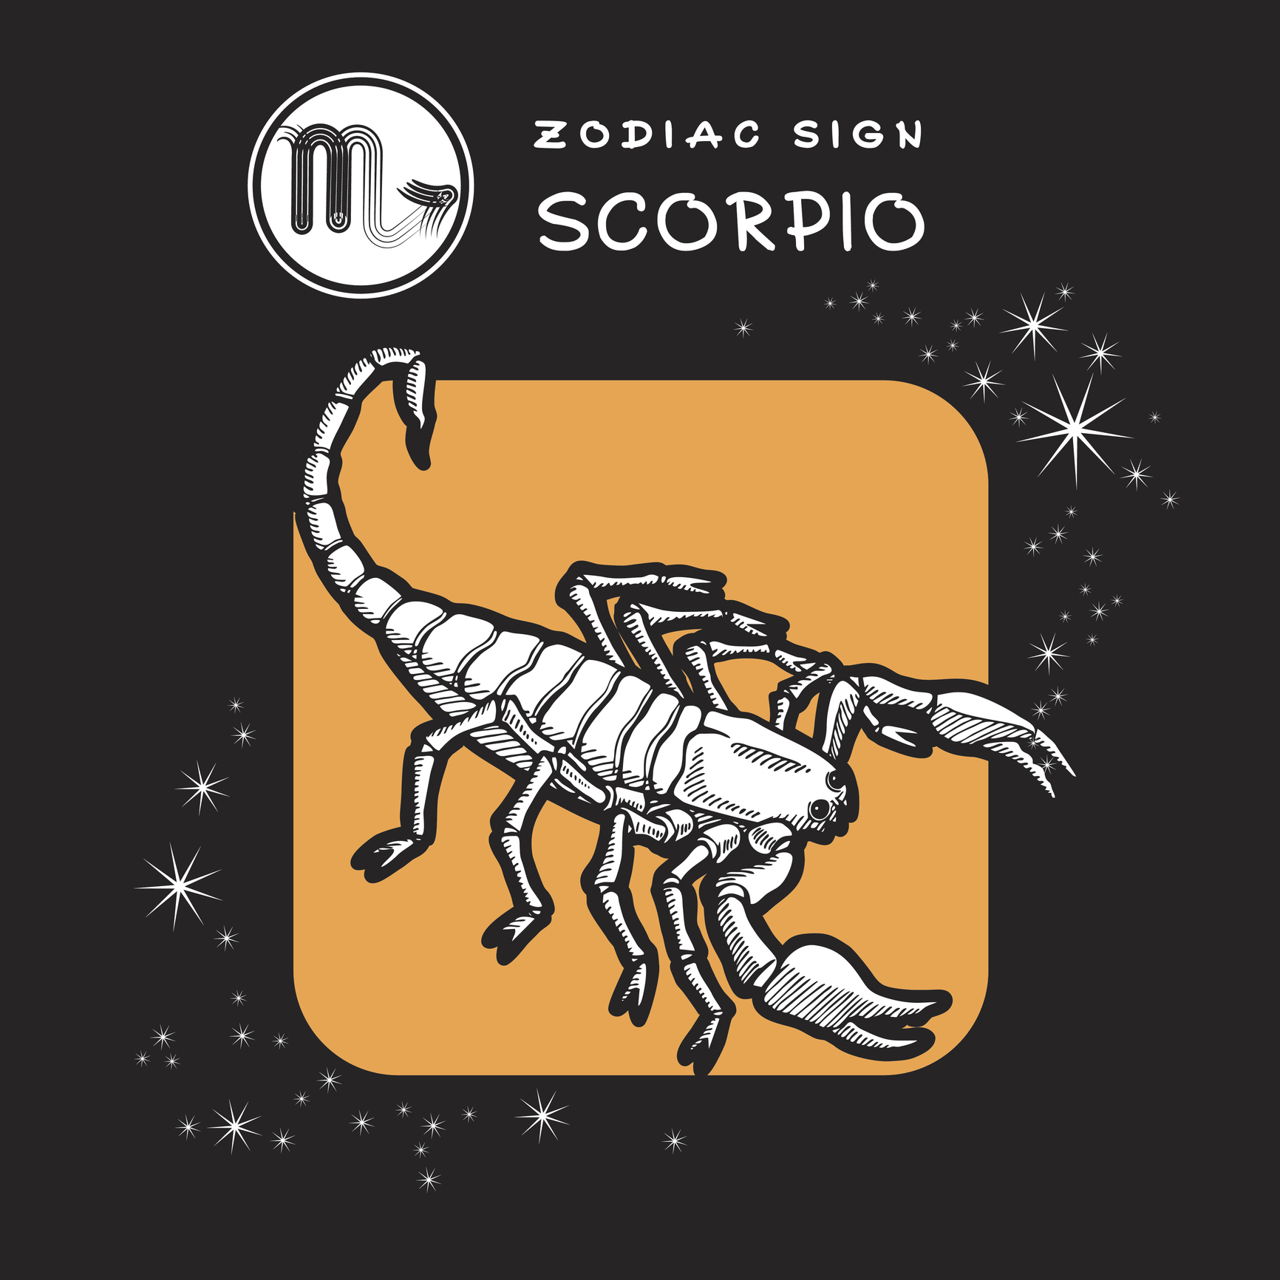 Traits scorpio personality Scorpio Sign: